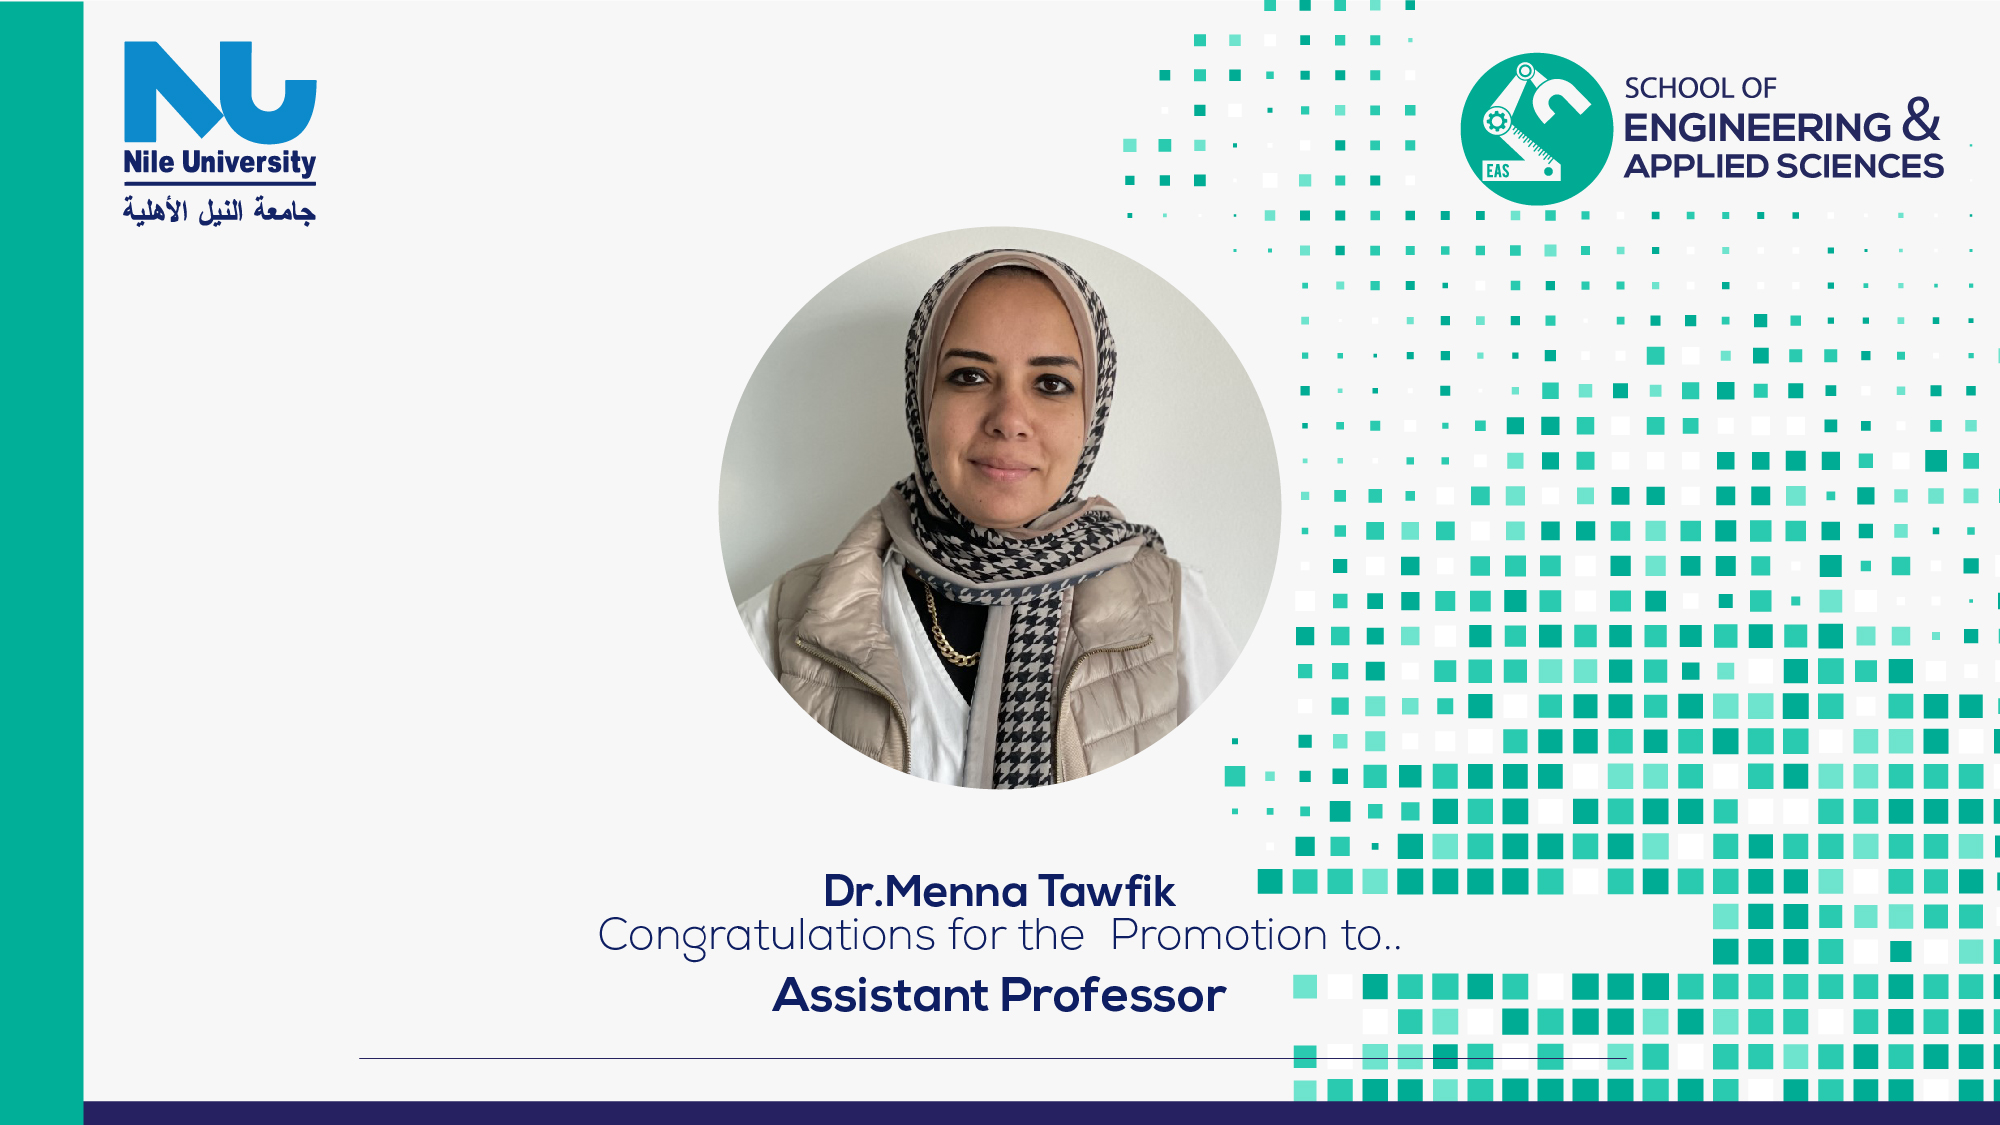 Dr. Menna Tawfik's Promotion as an Assistant Professor